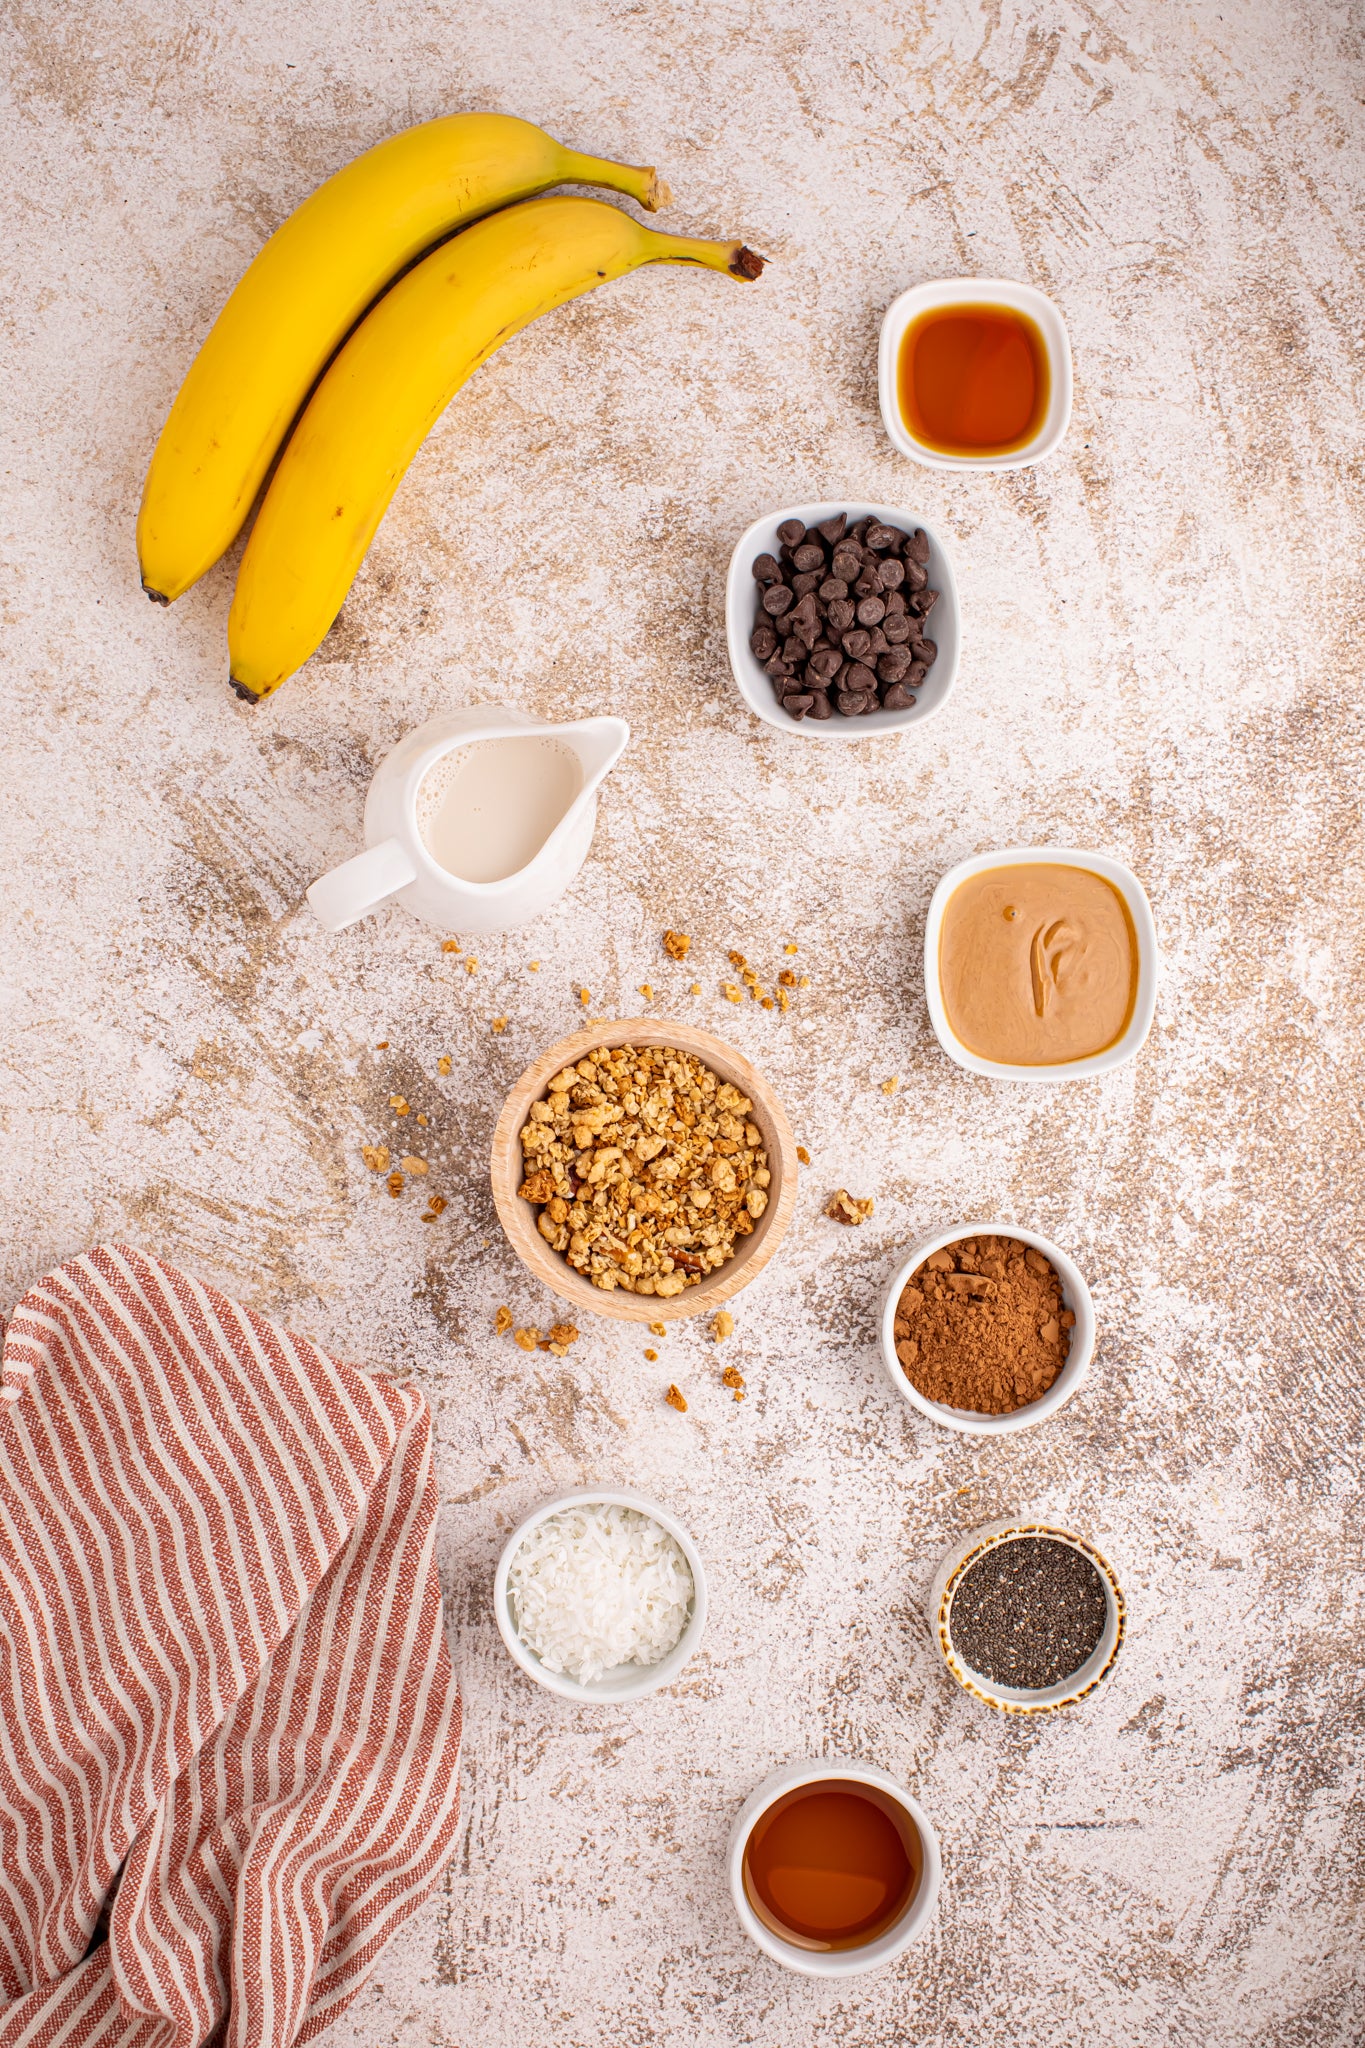 x SALE! Chocolate PB Banana Smoothie Bowl - Exclusive Recipe